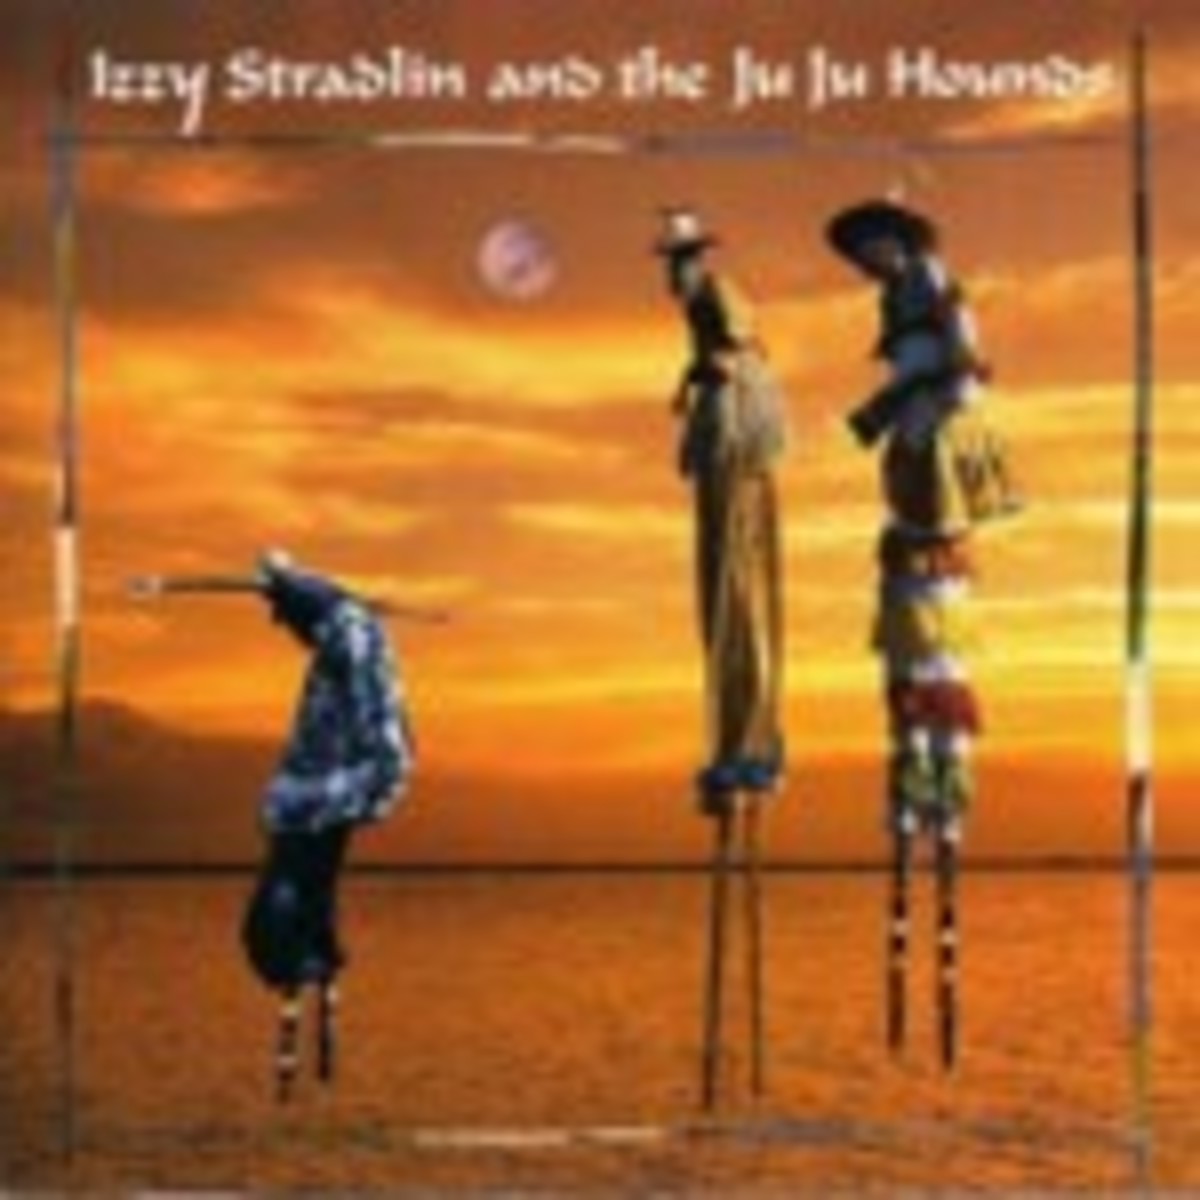 Izzy Stradlin and The Ju Ju Hounds